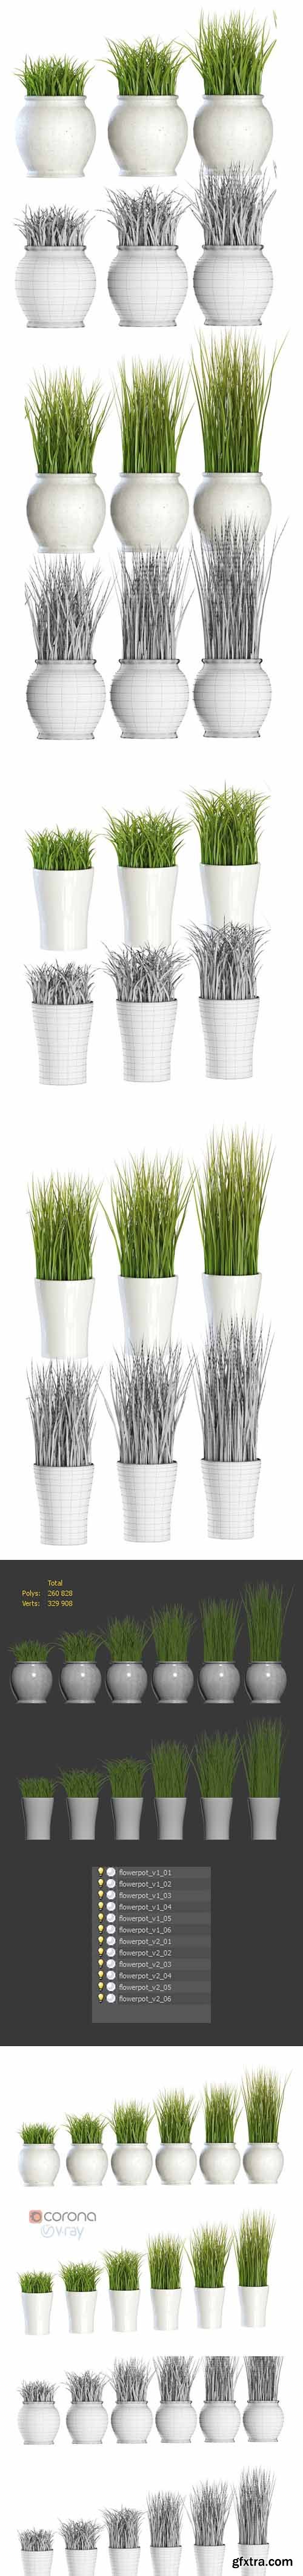 Grass in pots 3D model